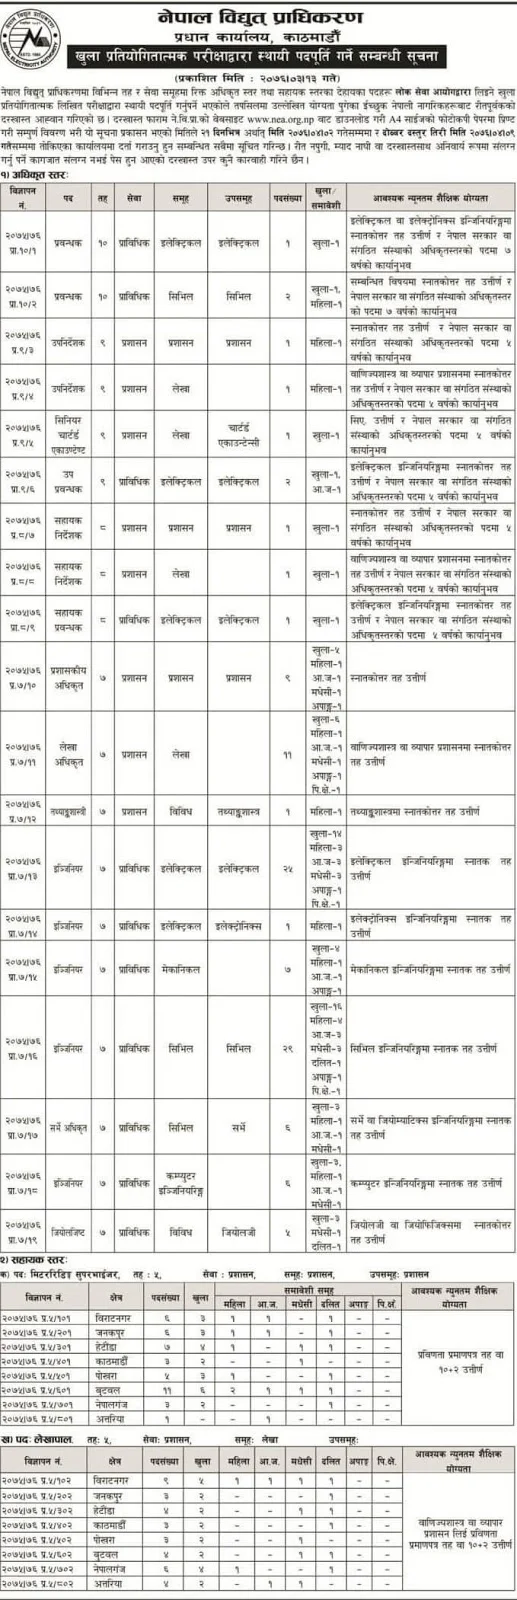 Nepal Electricity Authority Vacancy Notice1